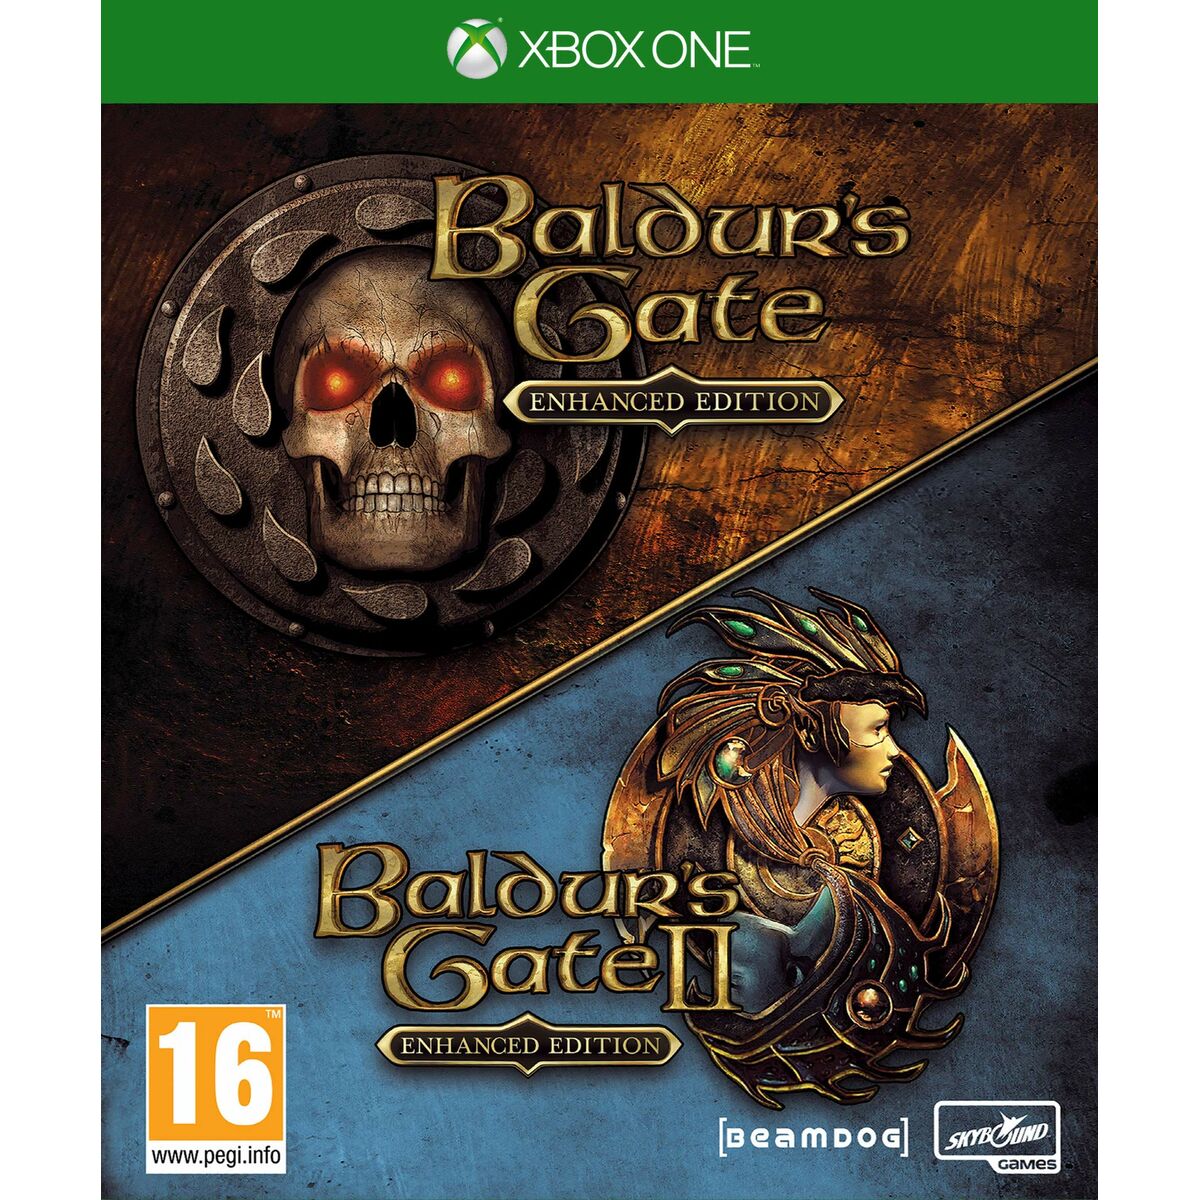 Joc video Xbox One Meridiem Games Baldurs Gate